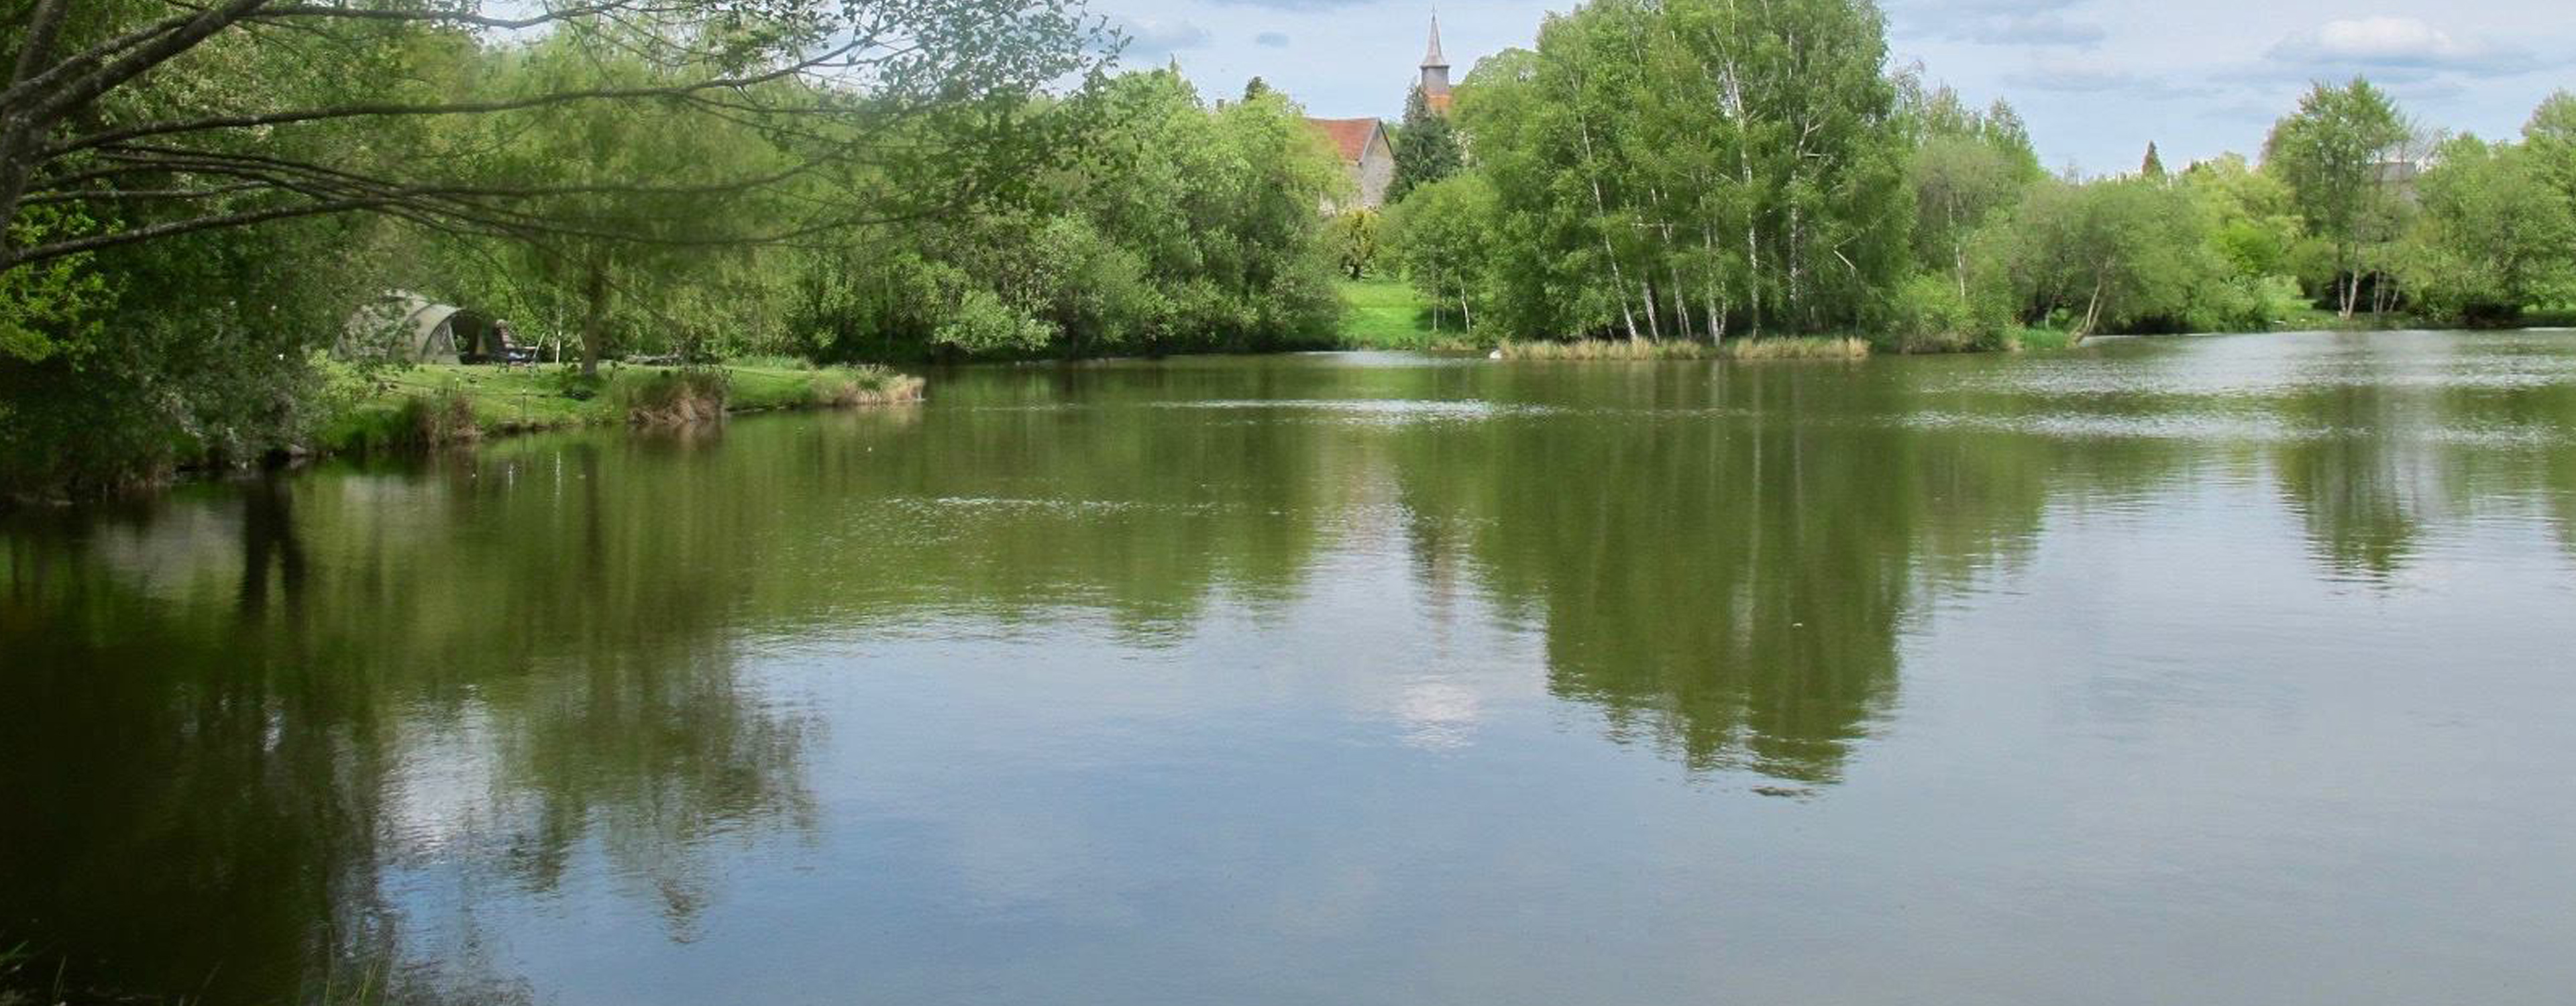 Etang de Azat-Chatenet carp fishing lake in Creuse, France